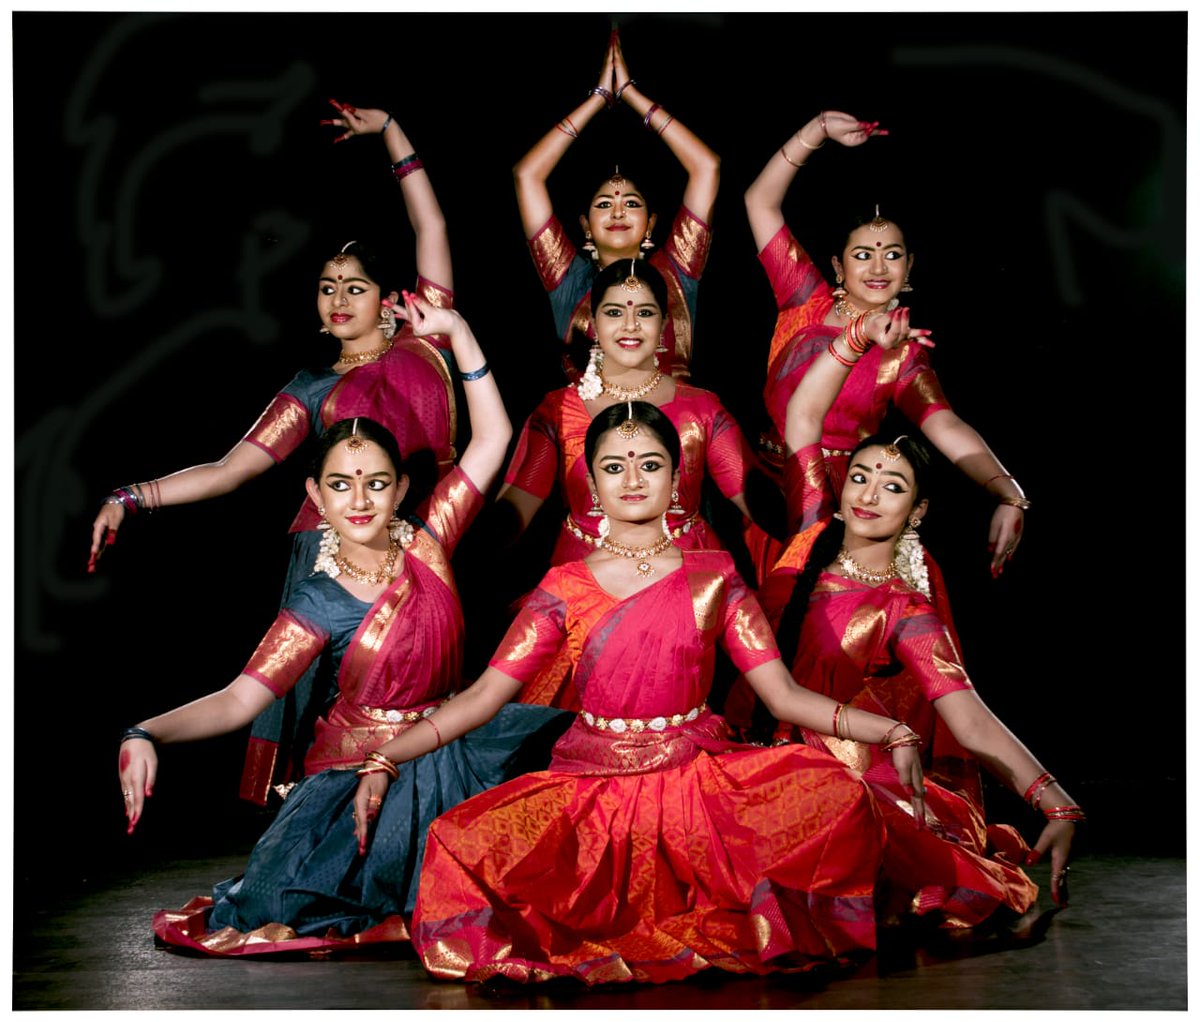 Dakshina Palli will begin teaching classes in Bharata Natyam (South Indian  Classical Dance) | The Dance Enthusiast